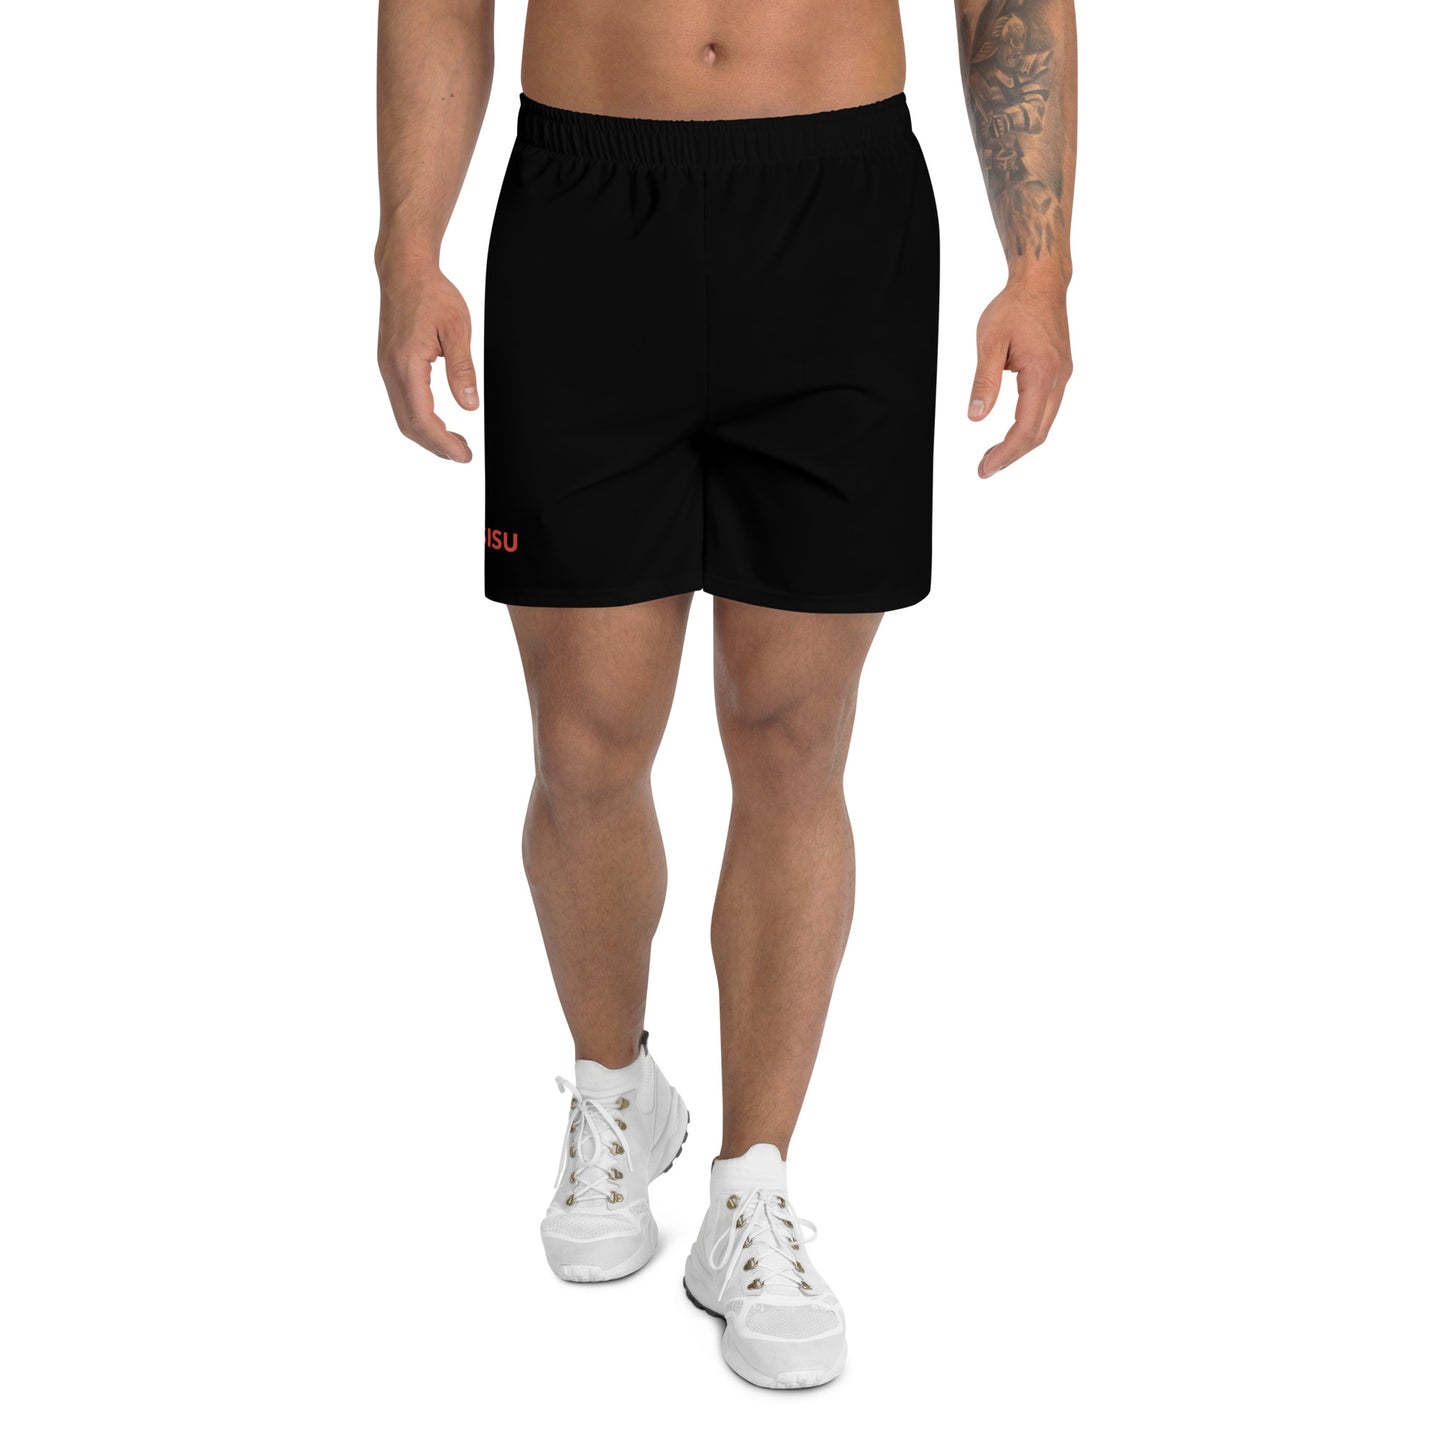 SISU - Men's Recycled Athletic Shorts -Black